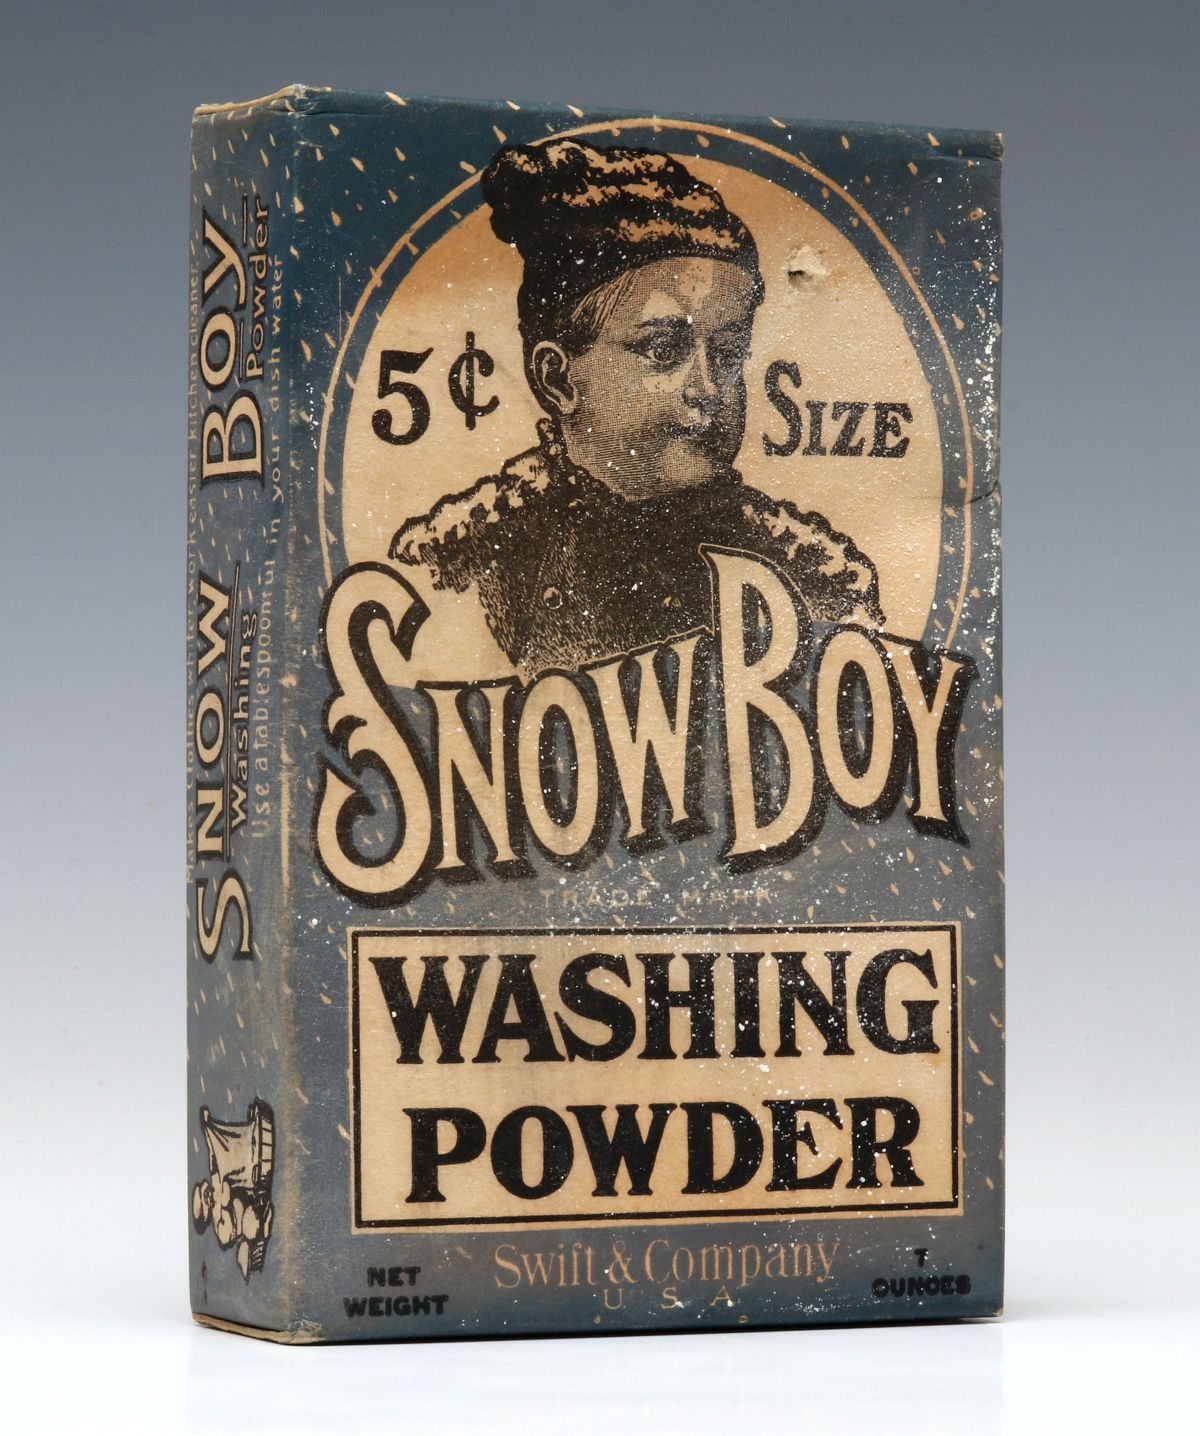 THE 5 CENT SIZE SNOW BOY WASHING POWDER - UNOPENED